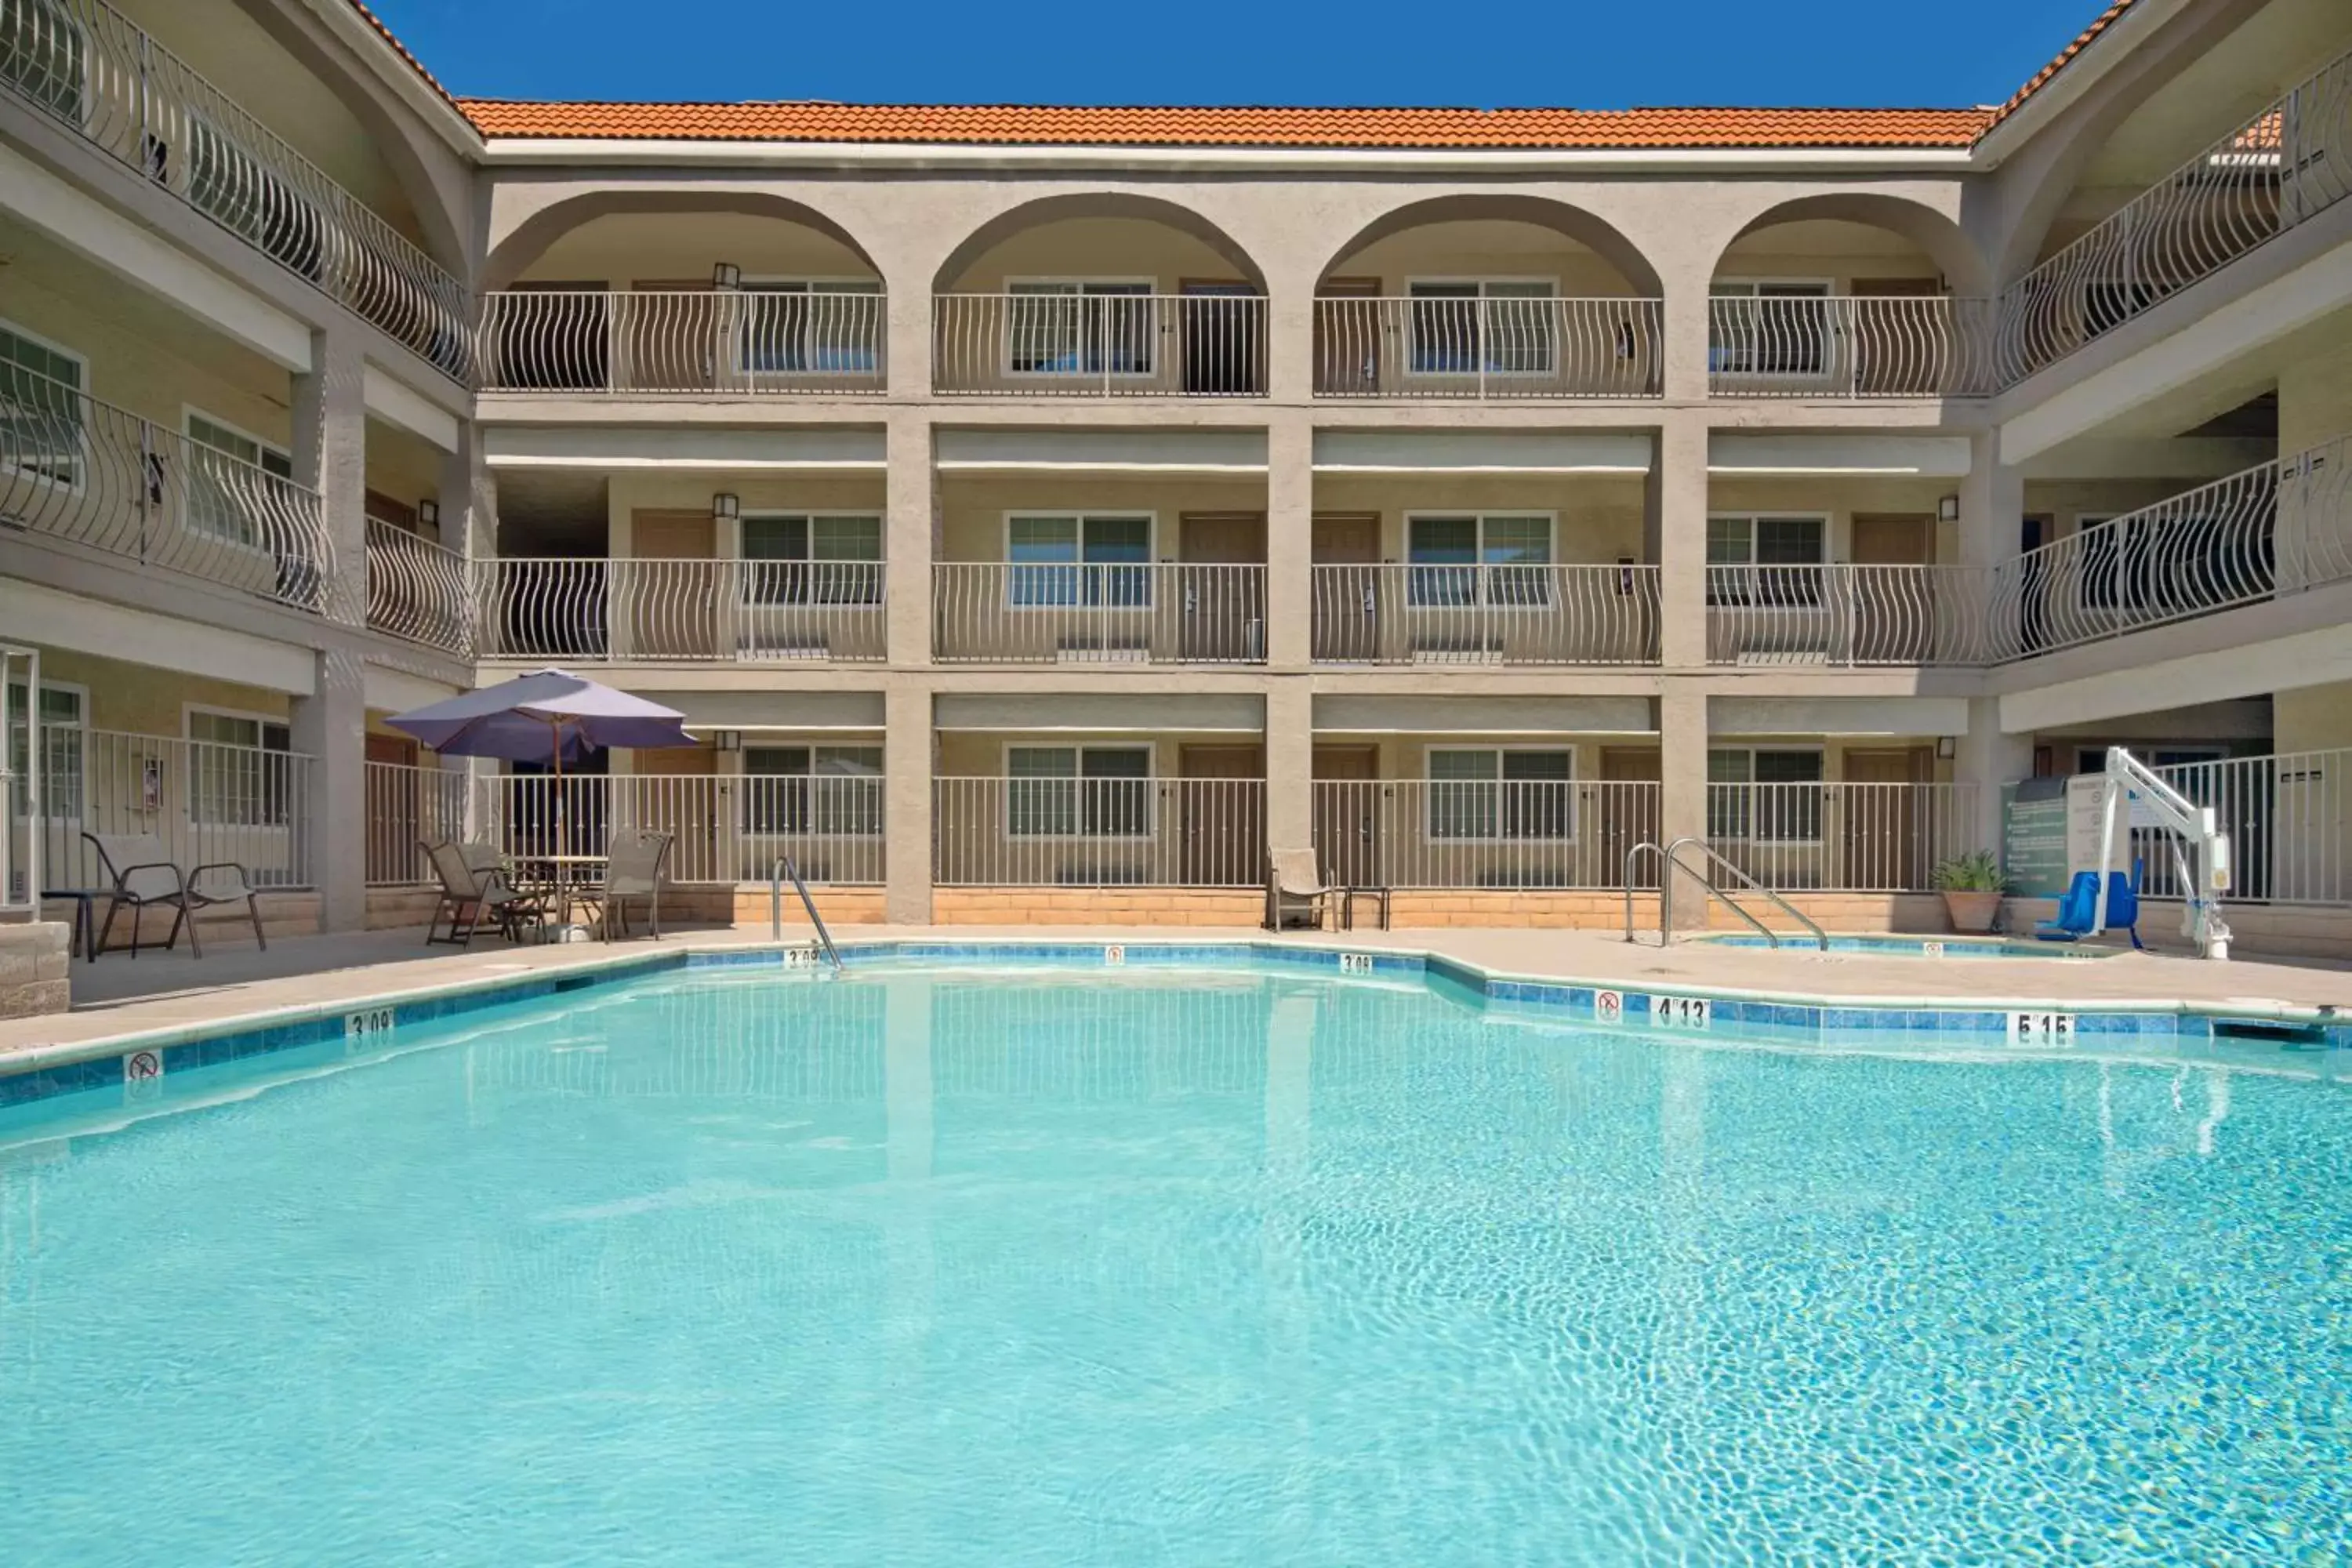 On site, Swimming Pool in Best Western San Diego/Miramar Hotel